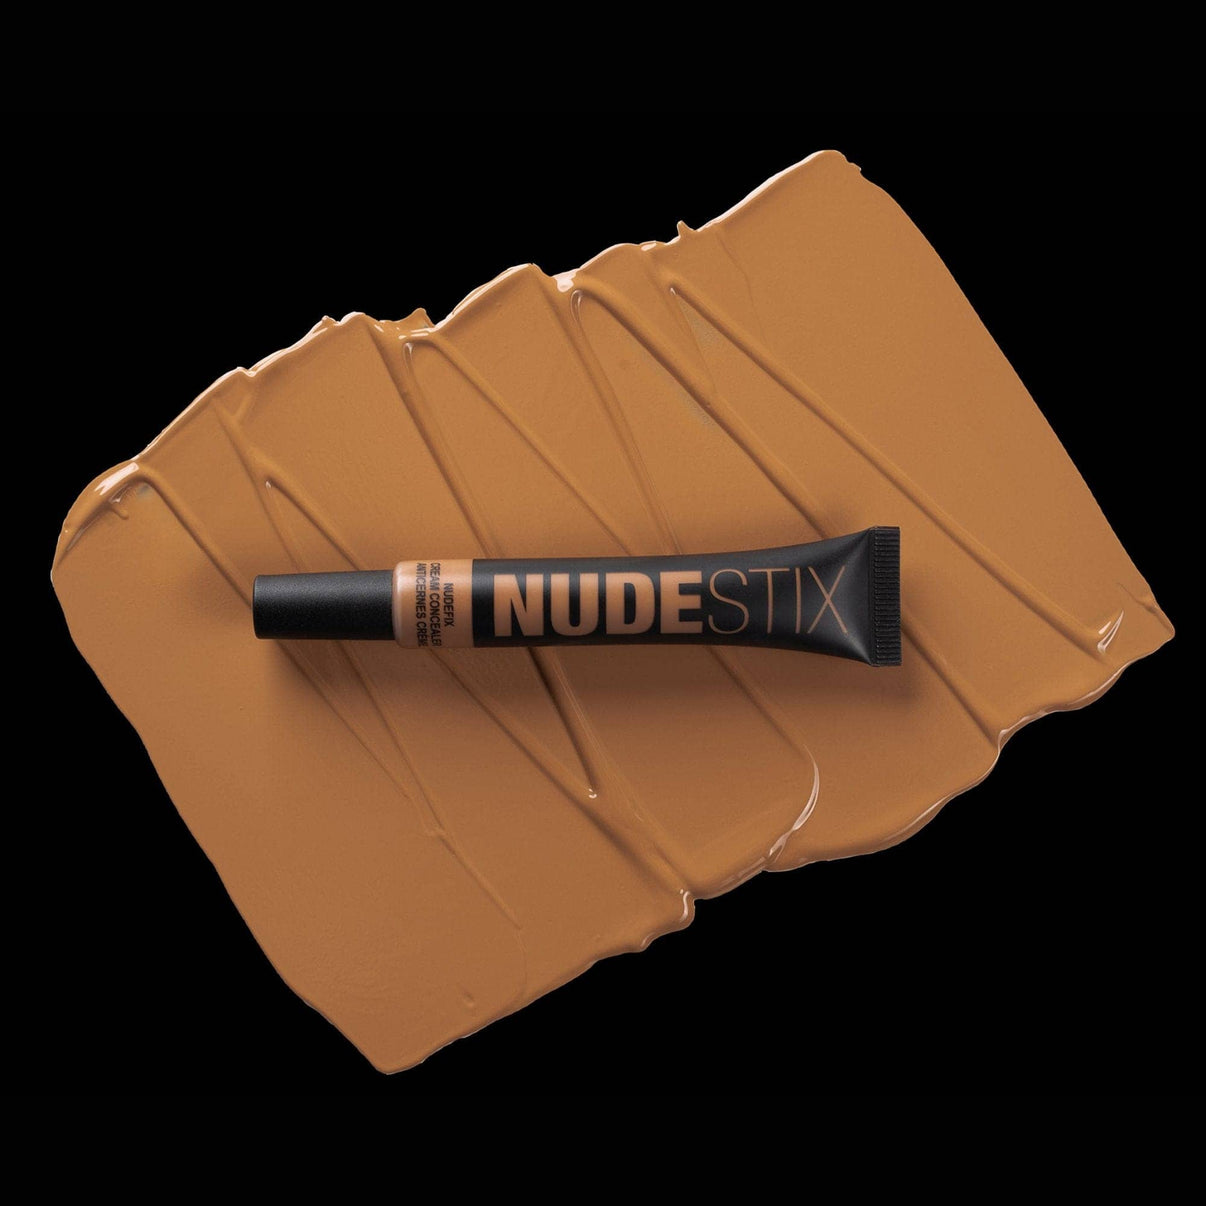 Nudefix cream concealer in shade nude 9 on top of texture swatch